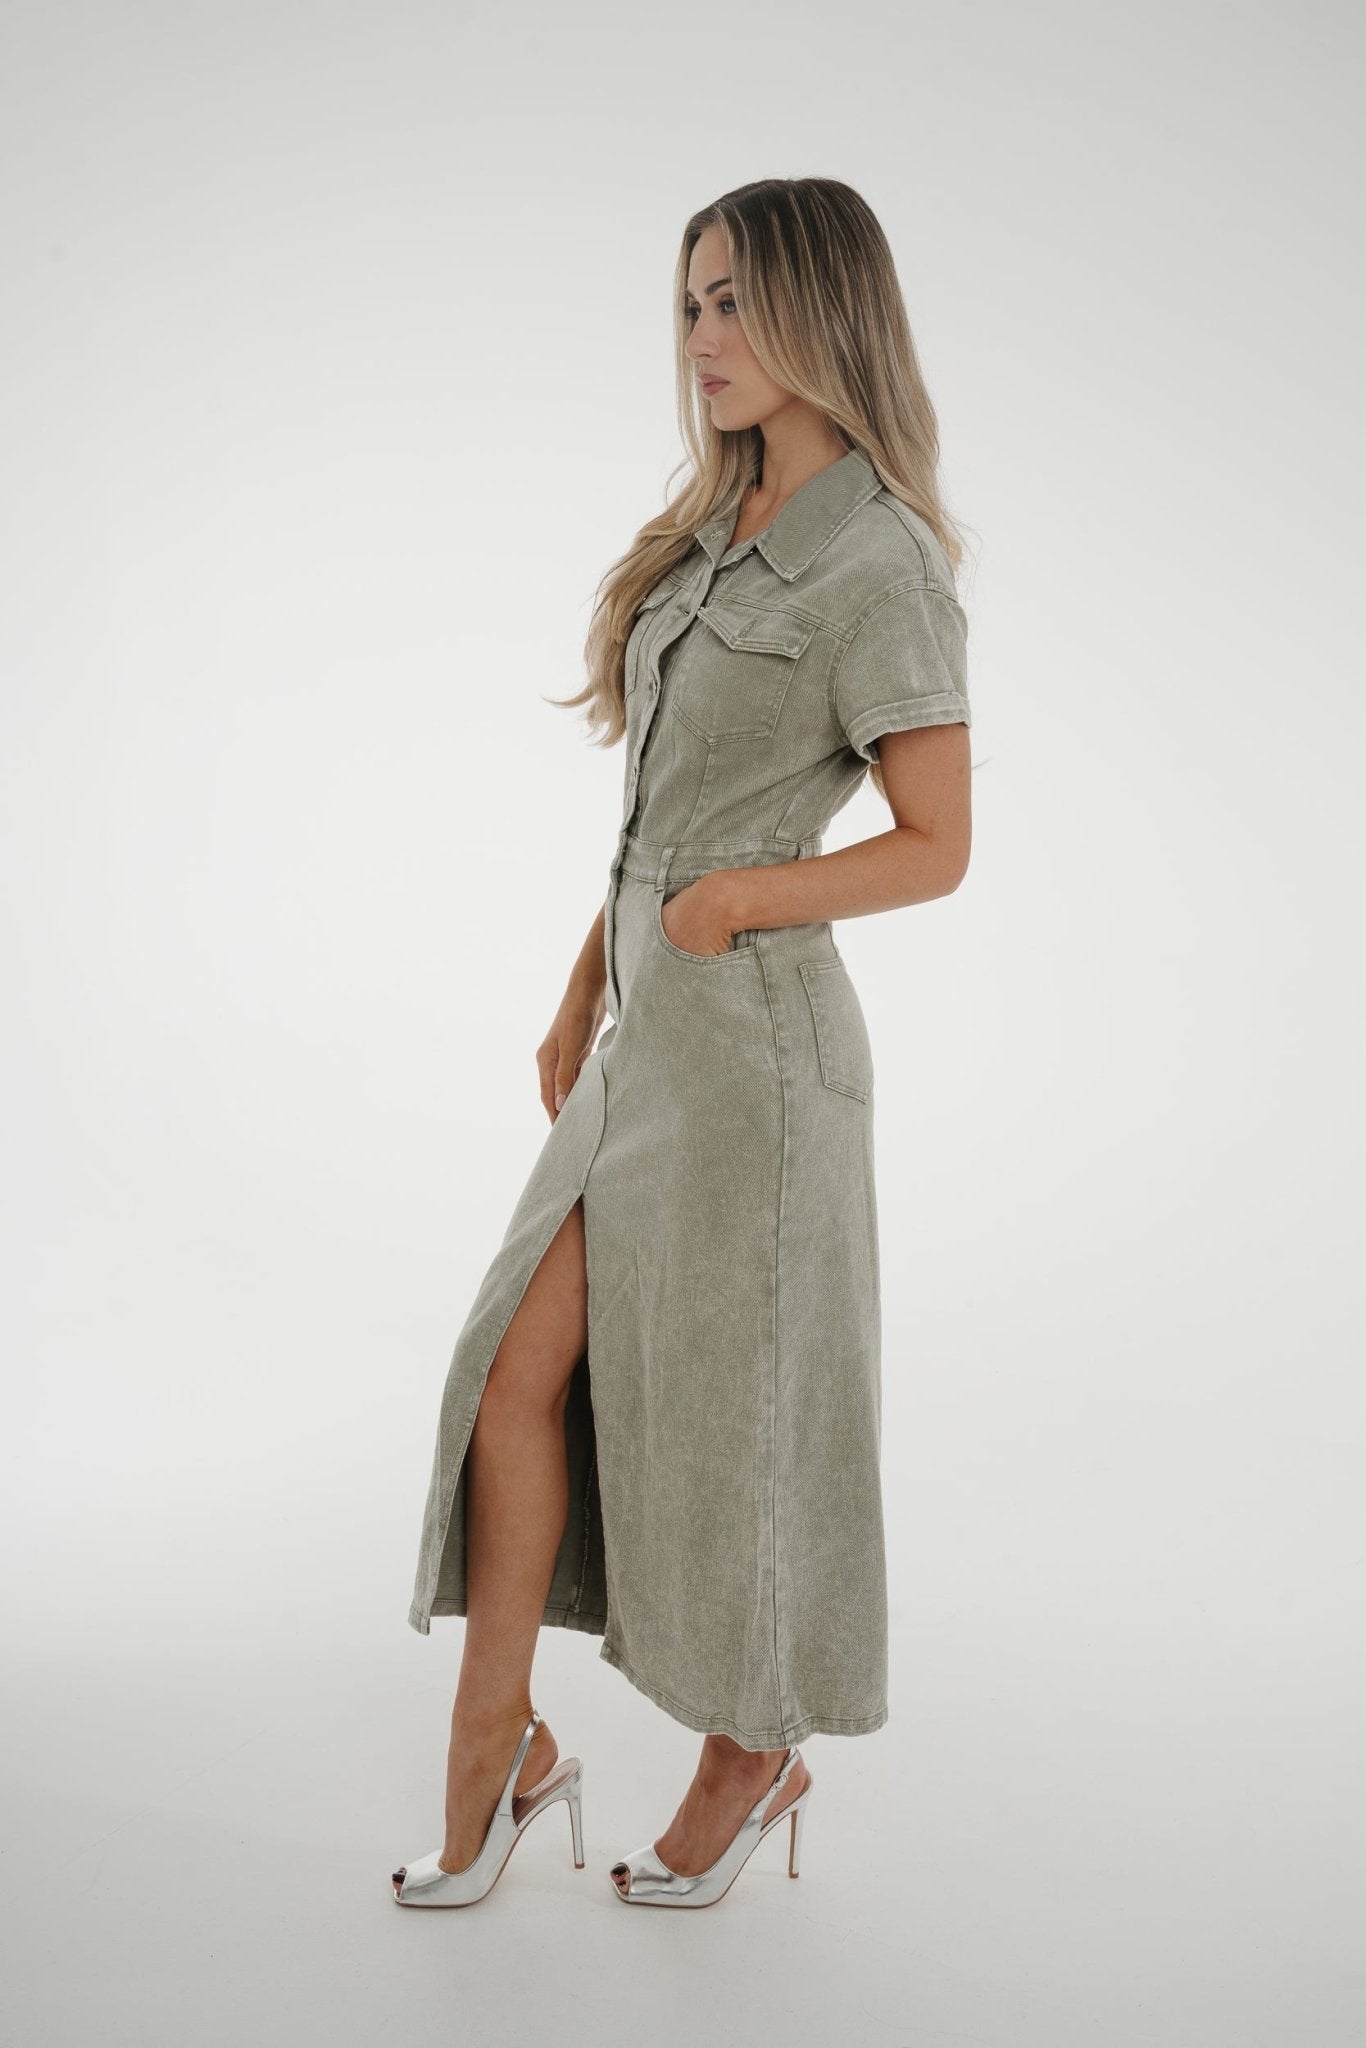 Holly Short Sleeve Denim Shirt Dress In Khaki - The Walk in Wardrobe